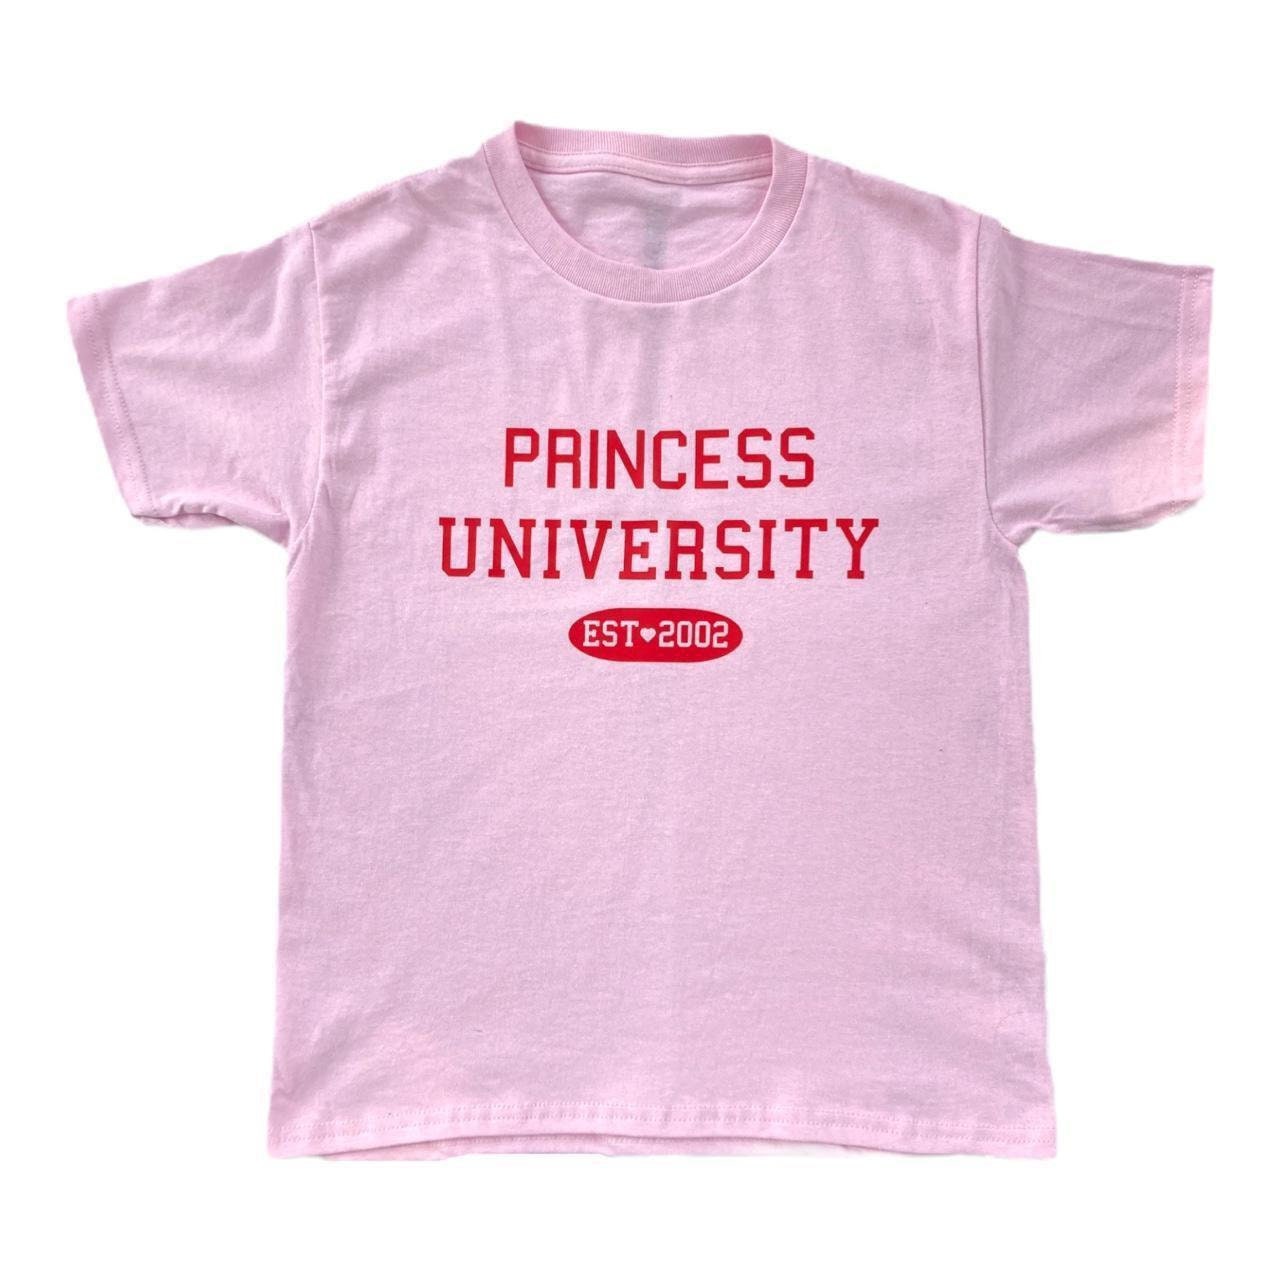 Minikidz 4 Pack Baby Girls Glitter Print Summer Design T-Shirts 